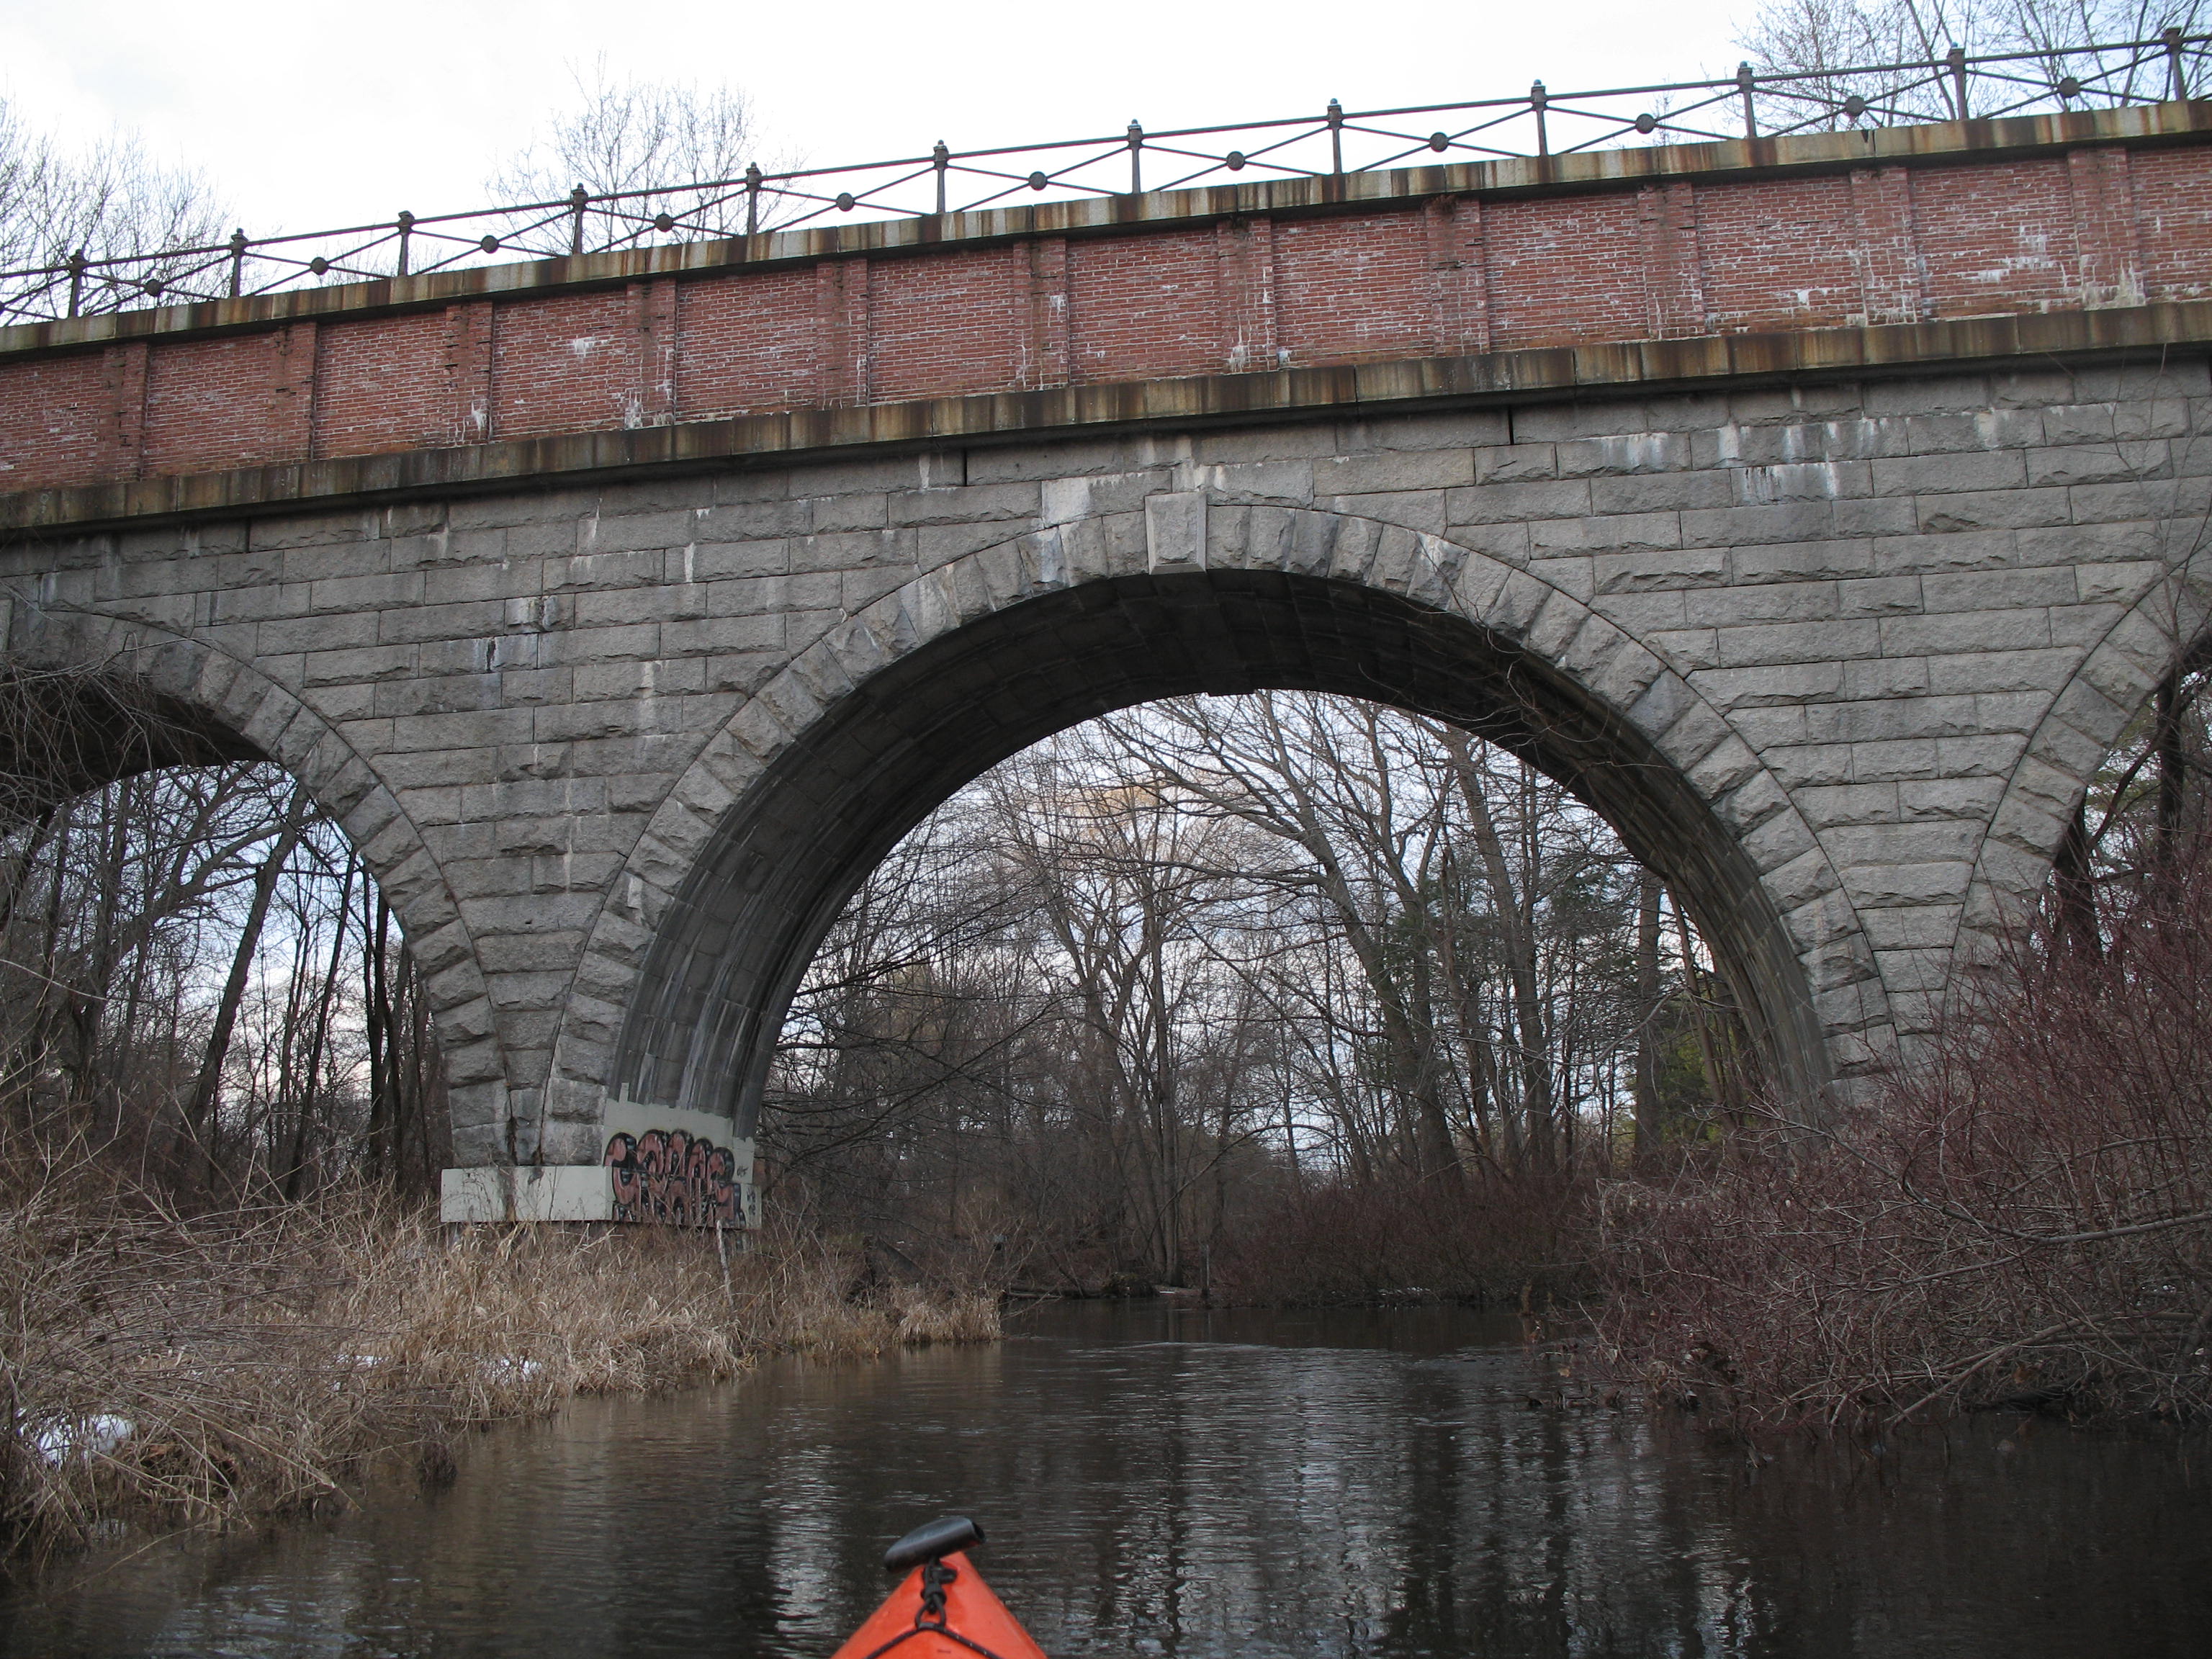 Charles River kayak winter bridge Wellesley aqueduct – I see ...